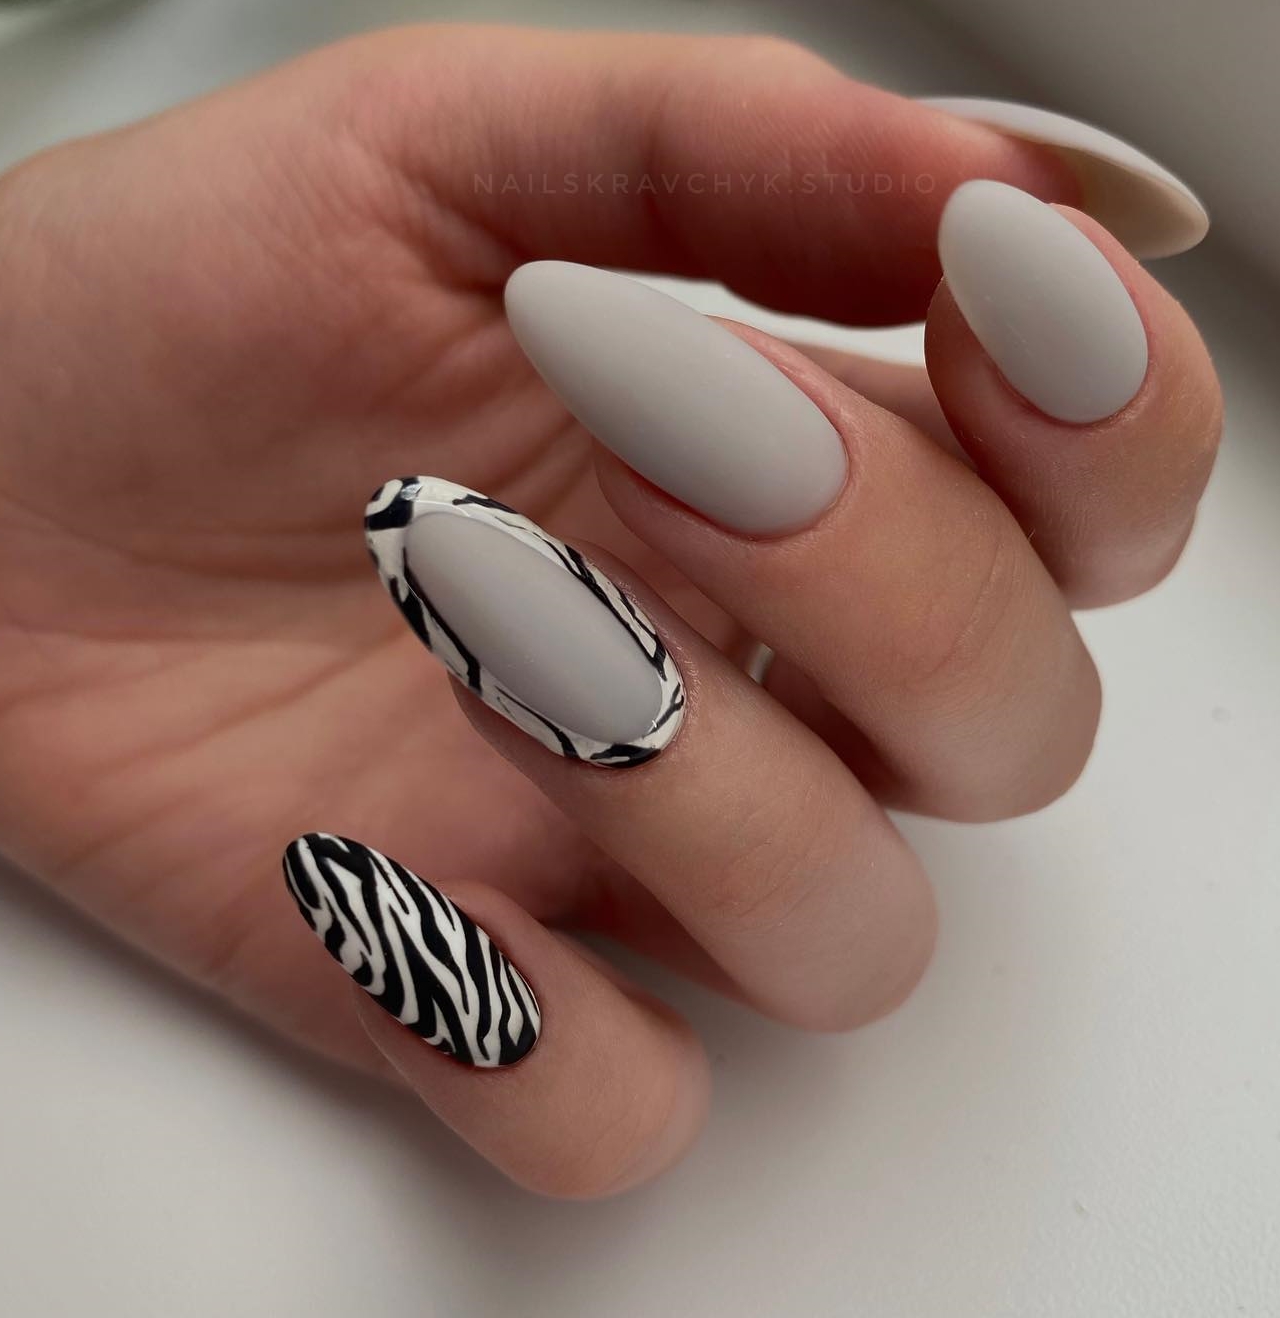 Gray Matte Almond Nails with Zebra Design